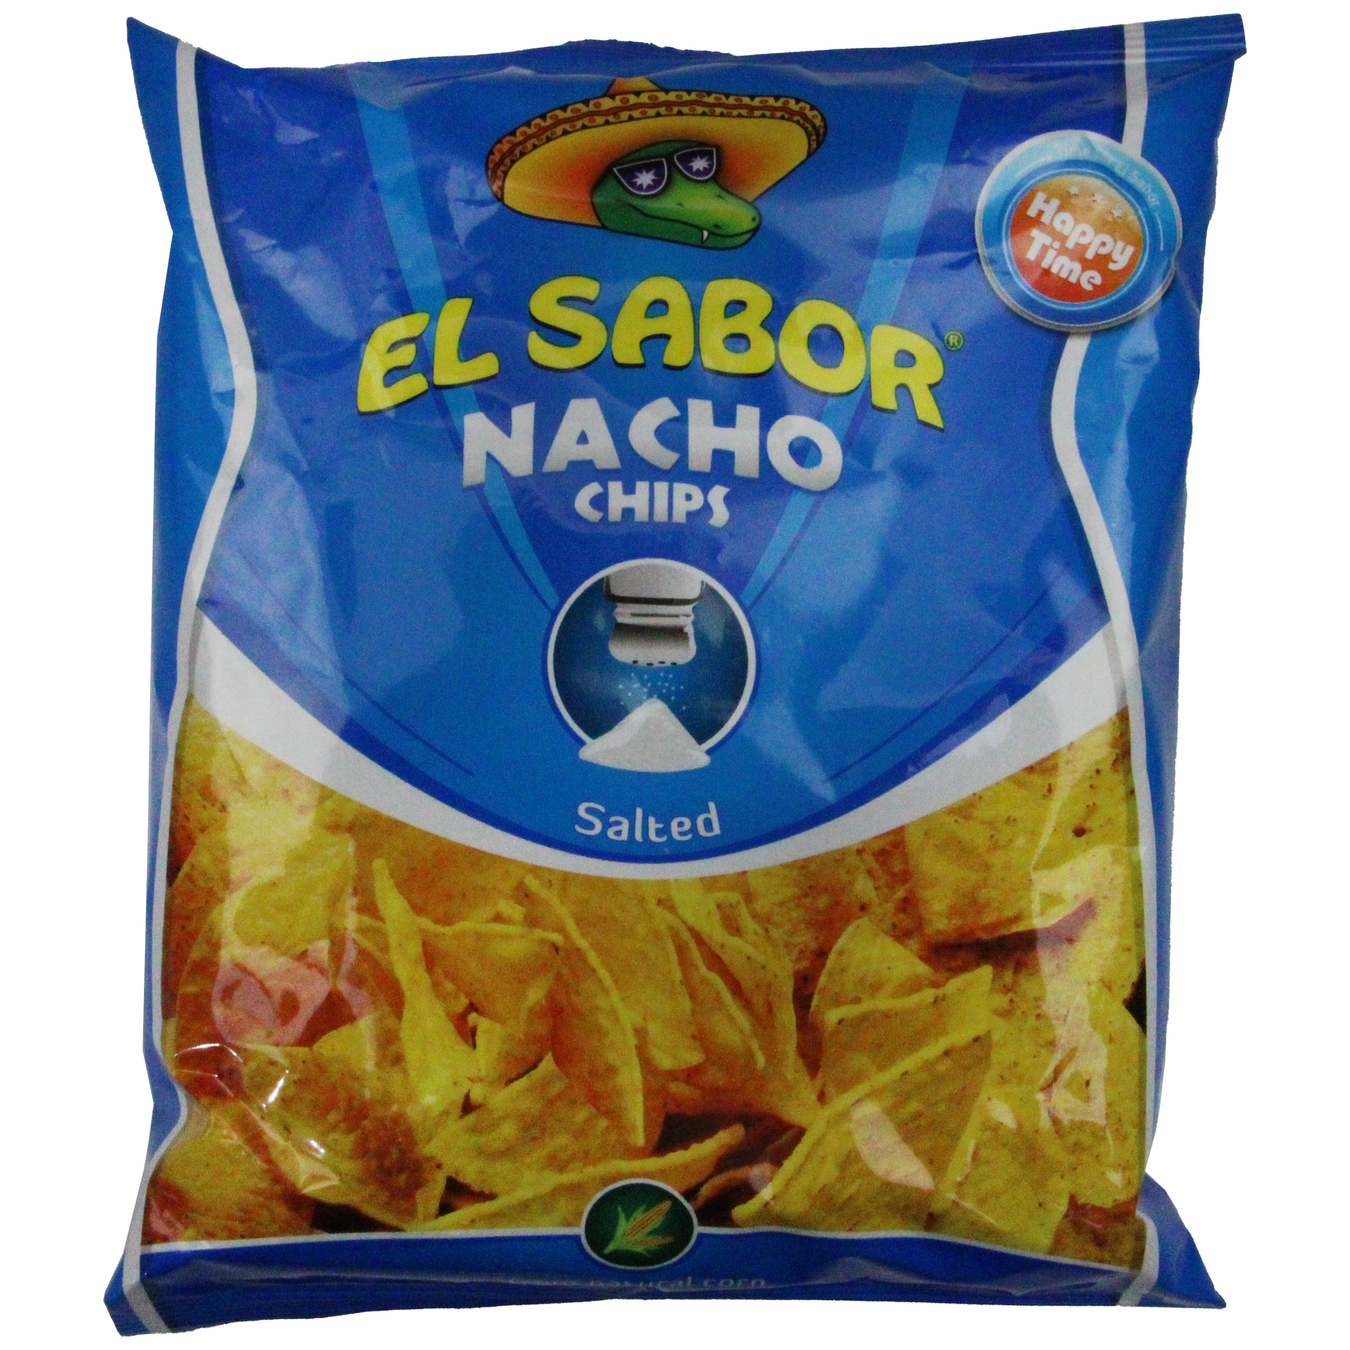 El Sabor Nacho Chips with salt 100g